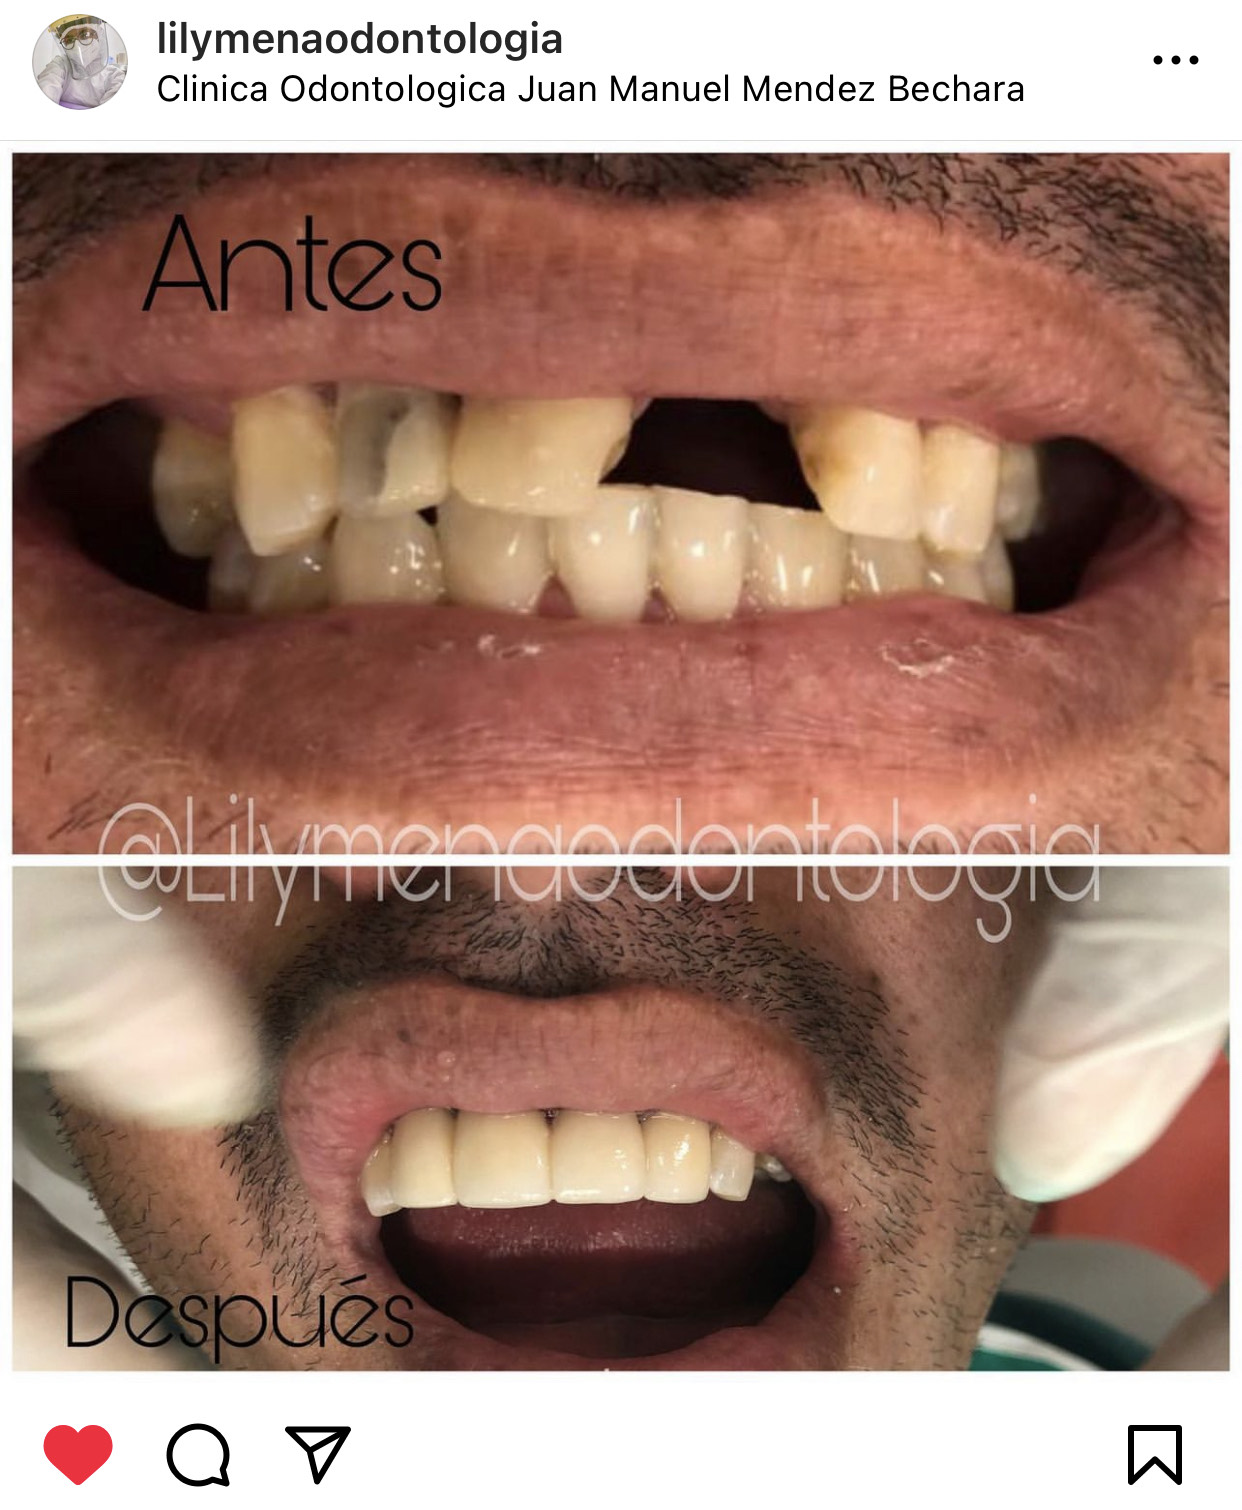 lilymenaodontologia
"Clinica Odontologica Juan Manuel Mendez Bechara